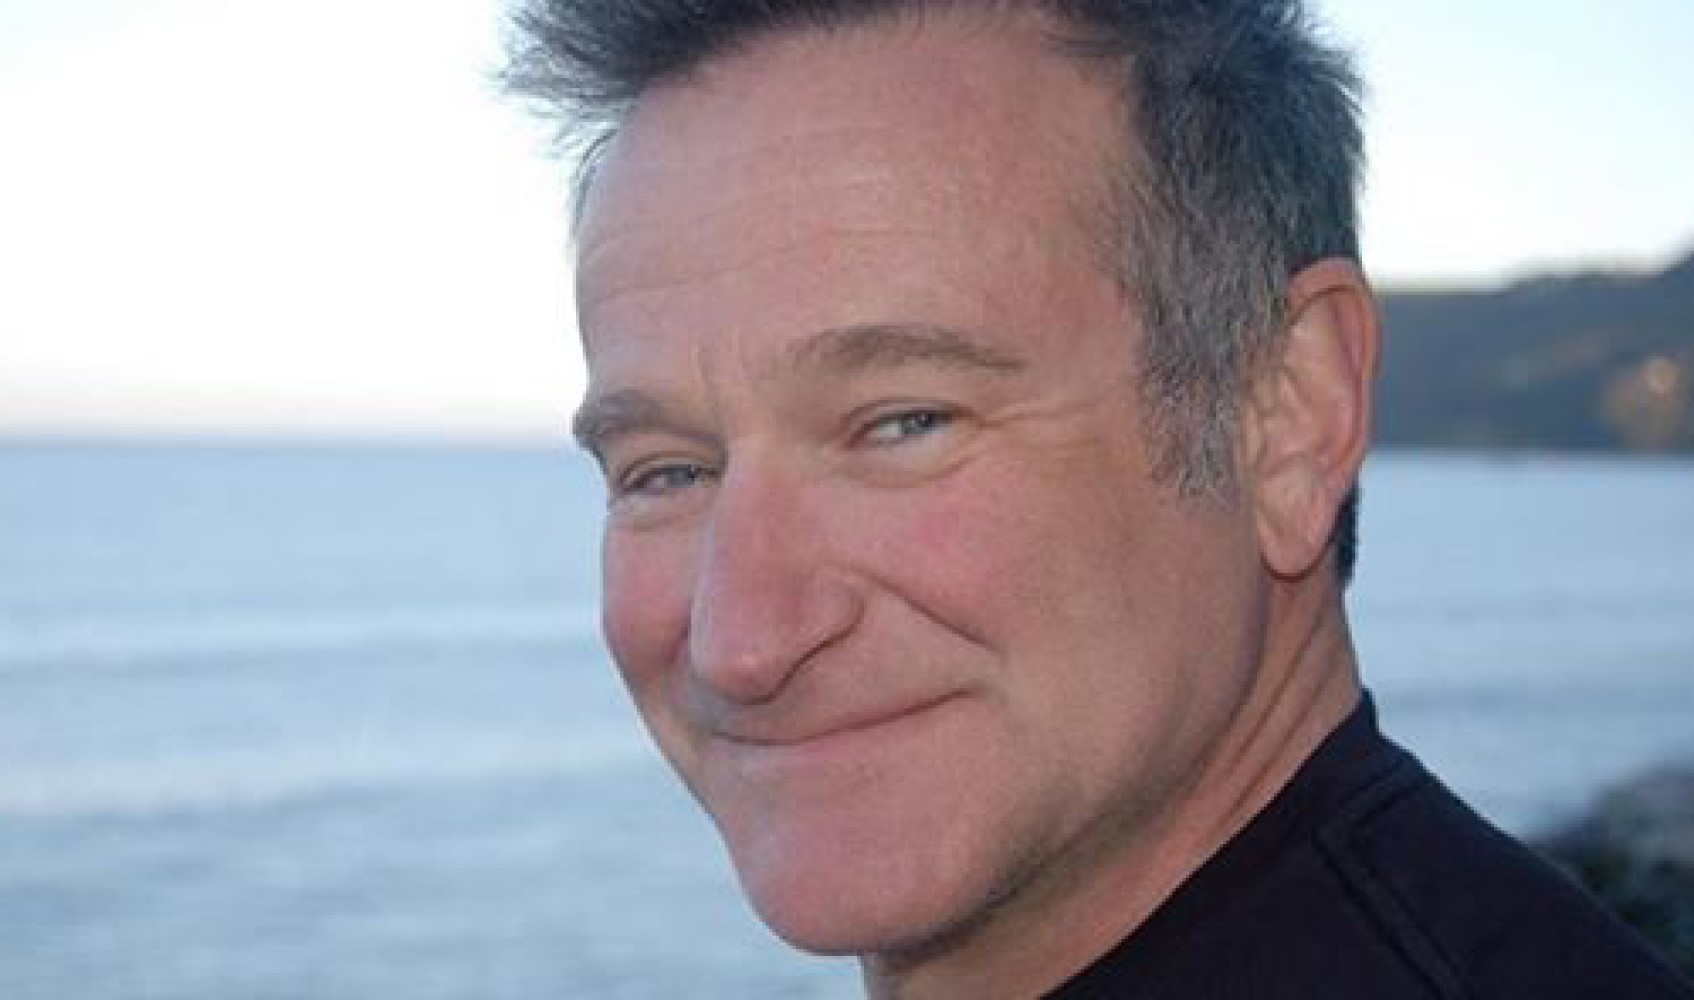 RIP Robin Williams. Depression is the silent killer.